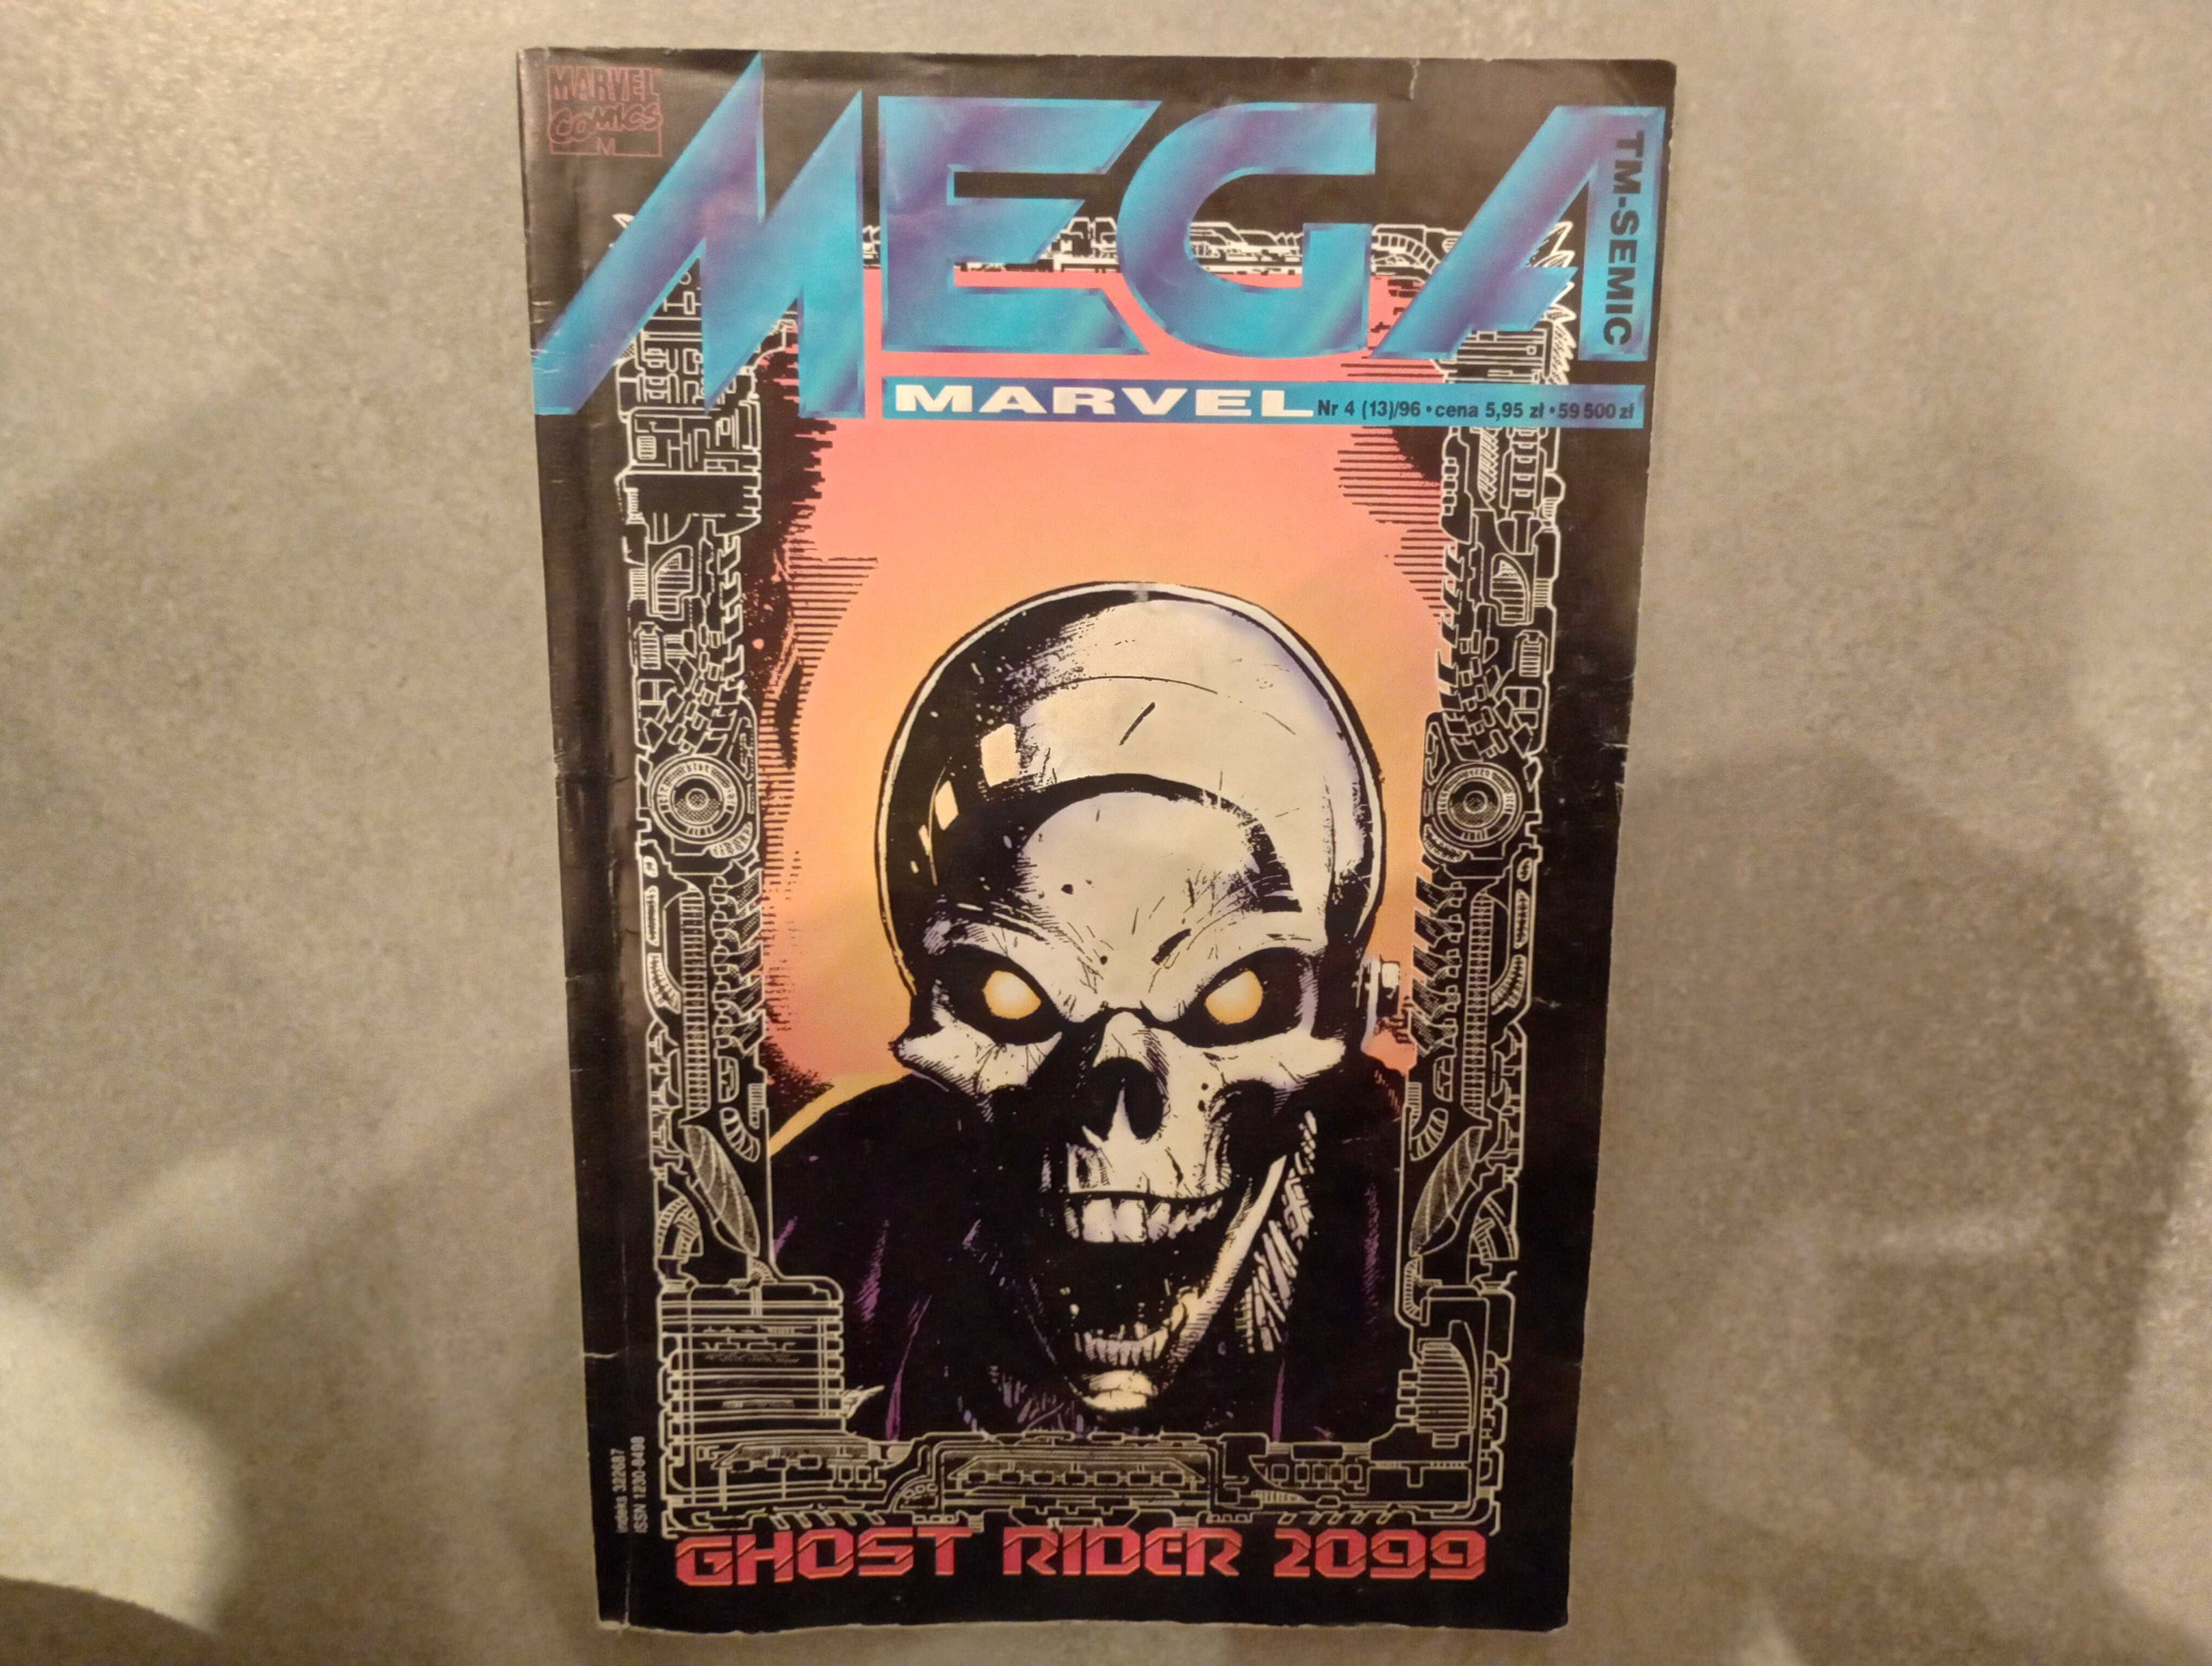 Mega Marvel "Ghost Rider 2099" #13 (4/96) Wyd. z 1996 r. UNIKAT Komiks